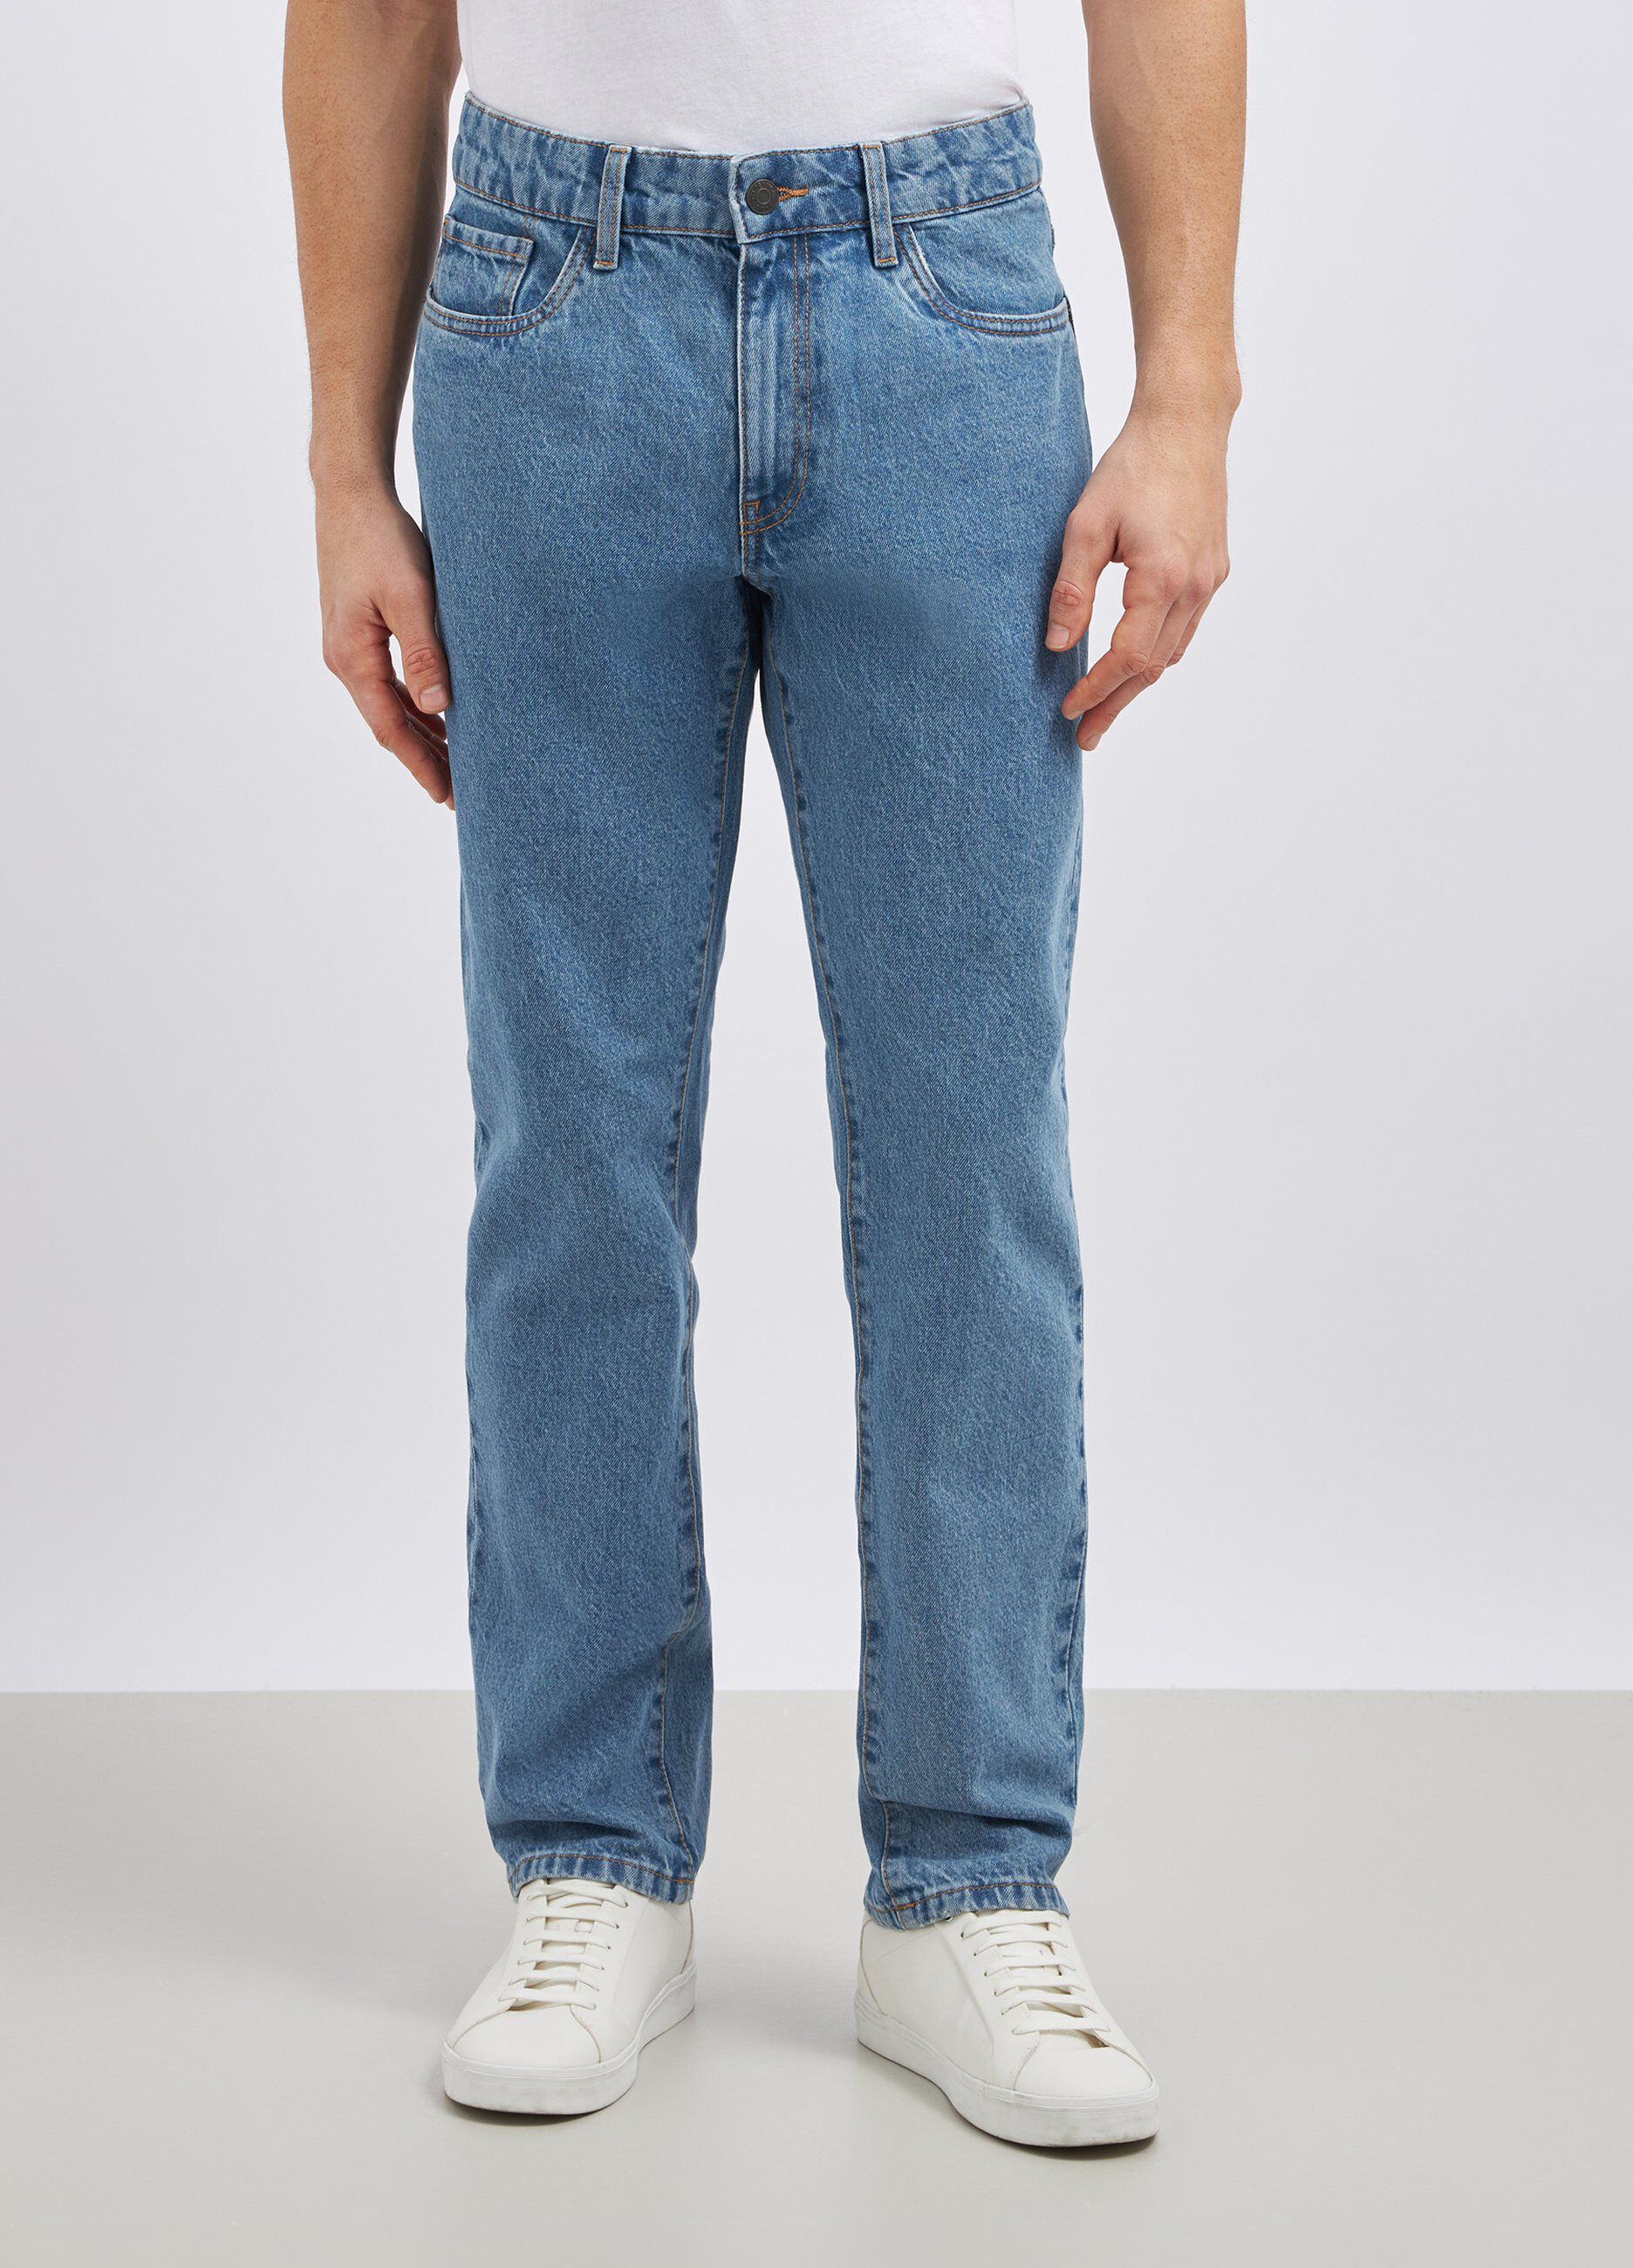 Jeans regular fit in puro cotone uomo_1